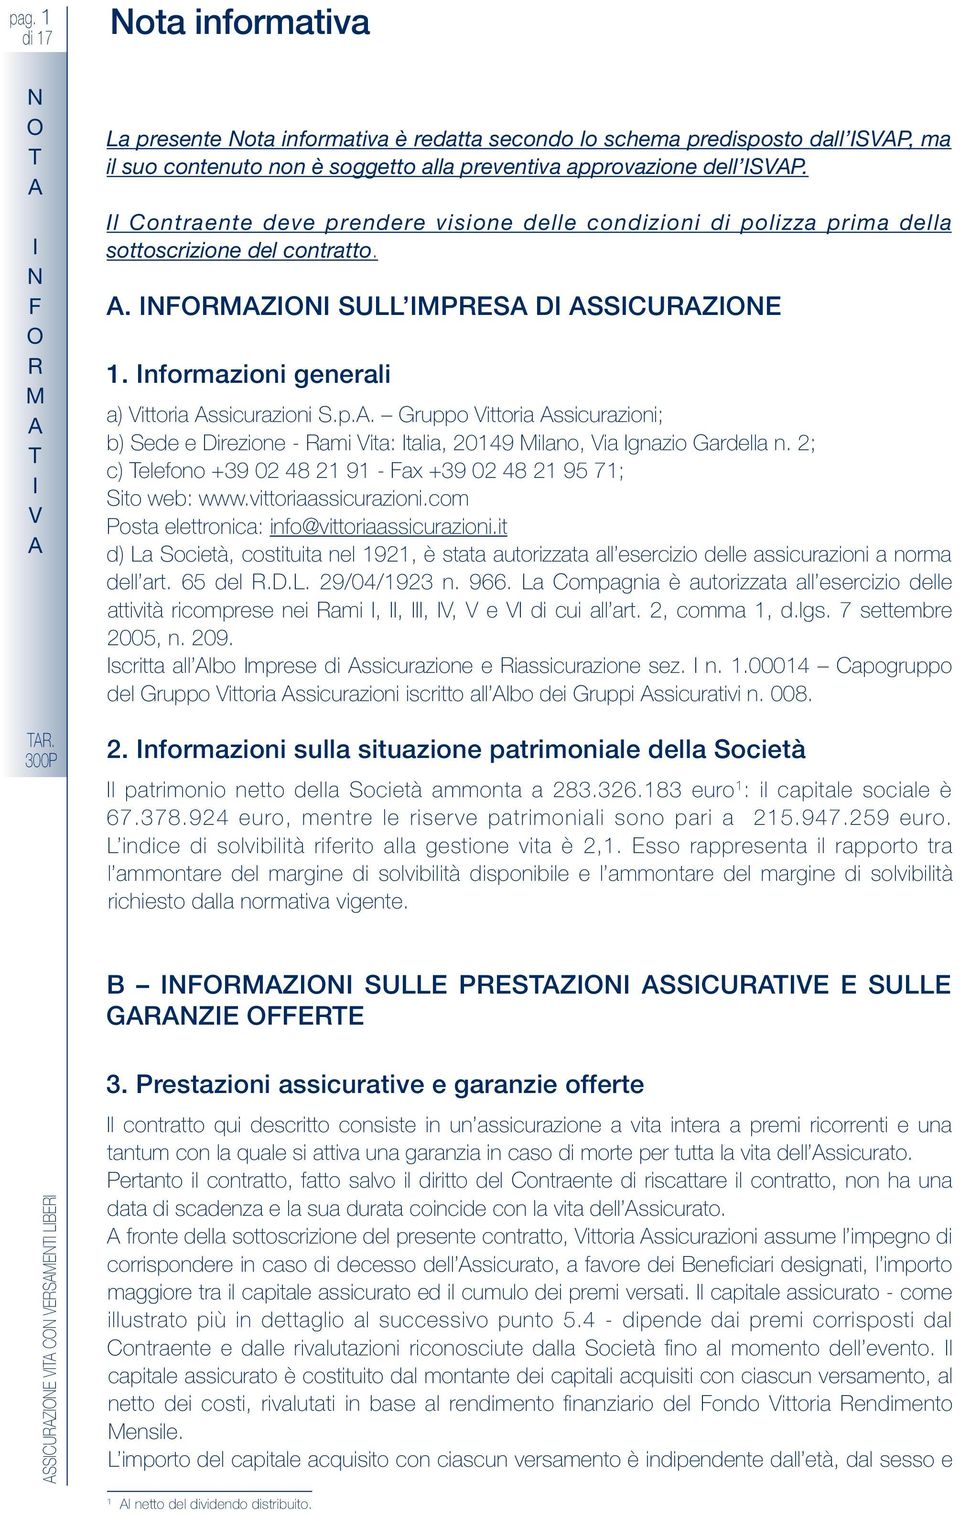 2; c) elefono +39 02 48 21 91 - ax +39 02 48 21 95 71; Sito web: www.vittoriaassicurazioni.com Posta elettronica: info@vittoriaassicurazioni.